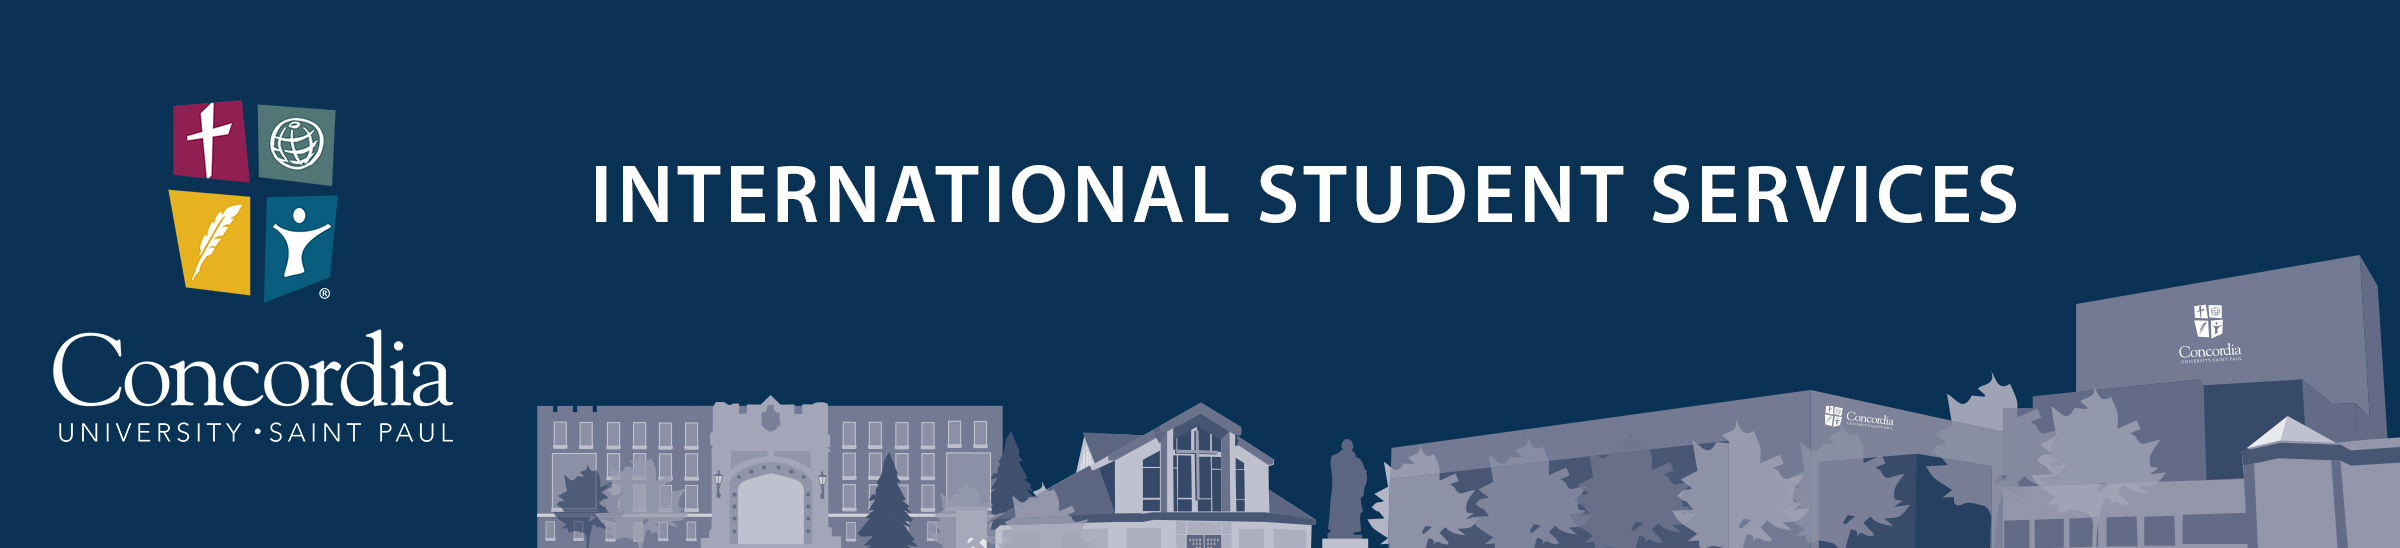 International Student Services - Concordia University, St. Paul